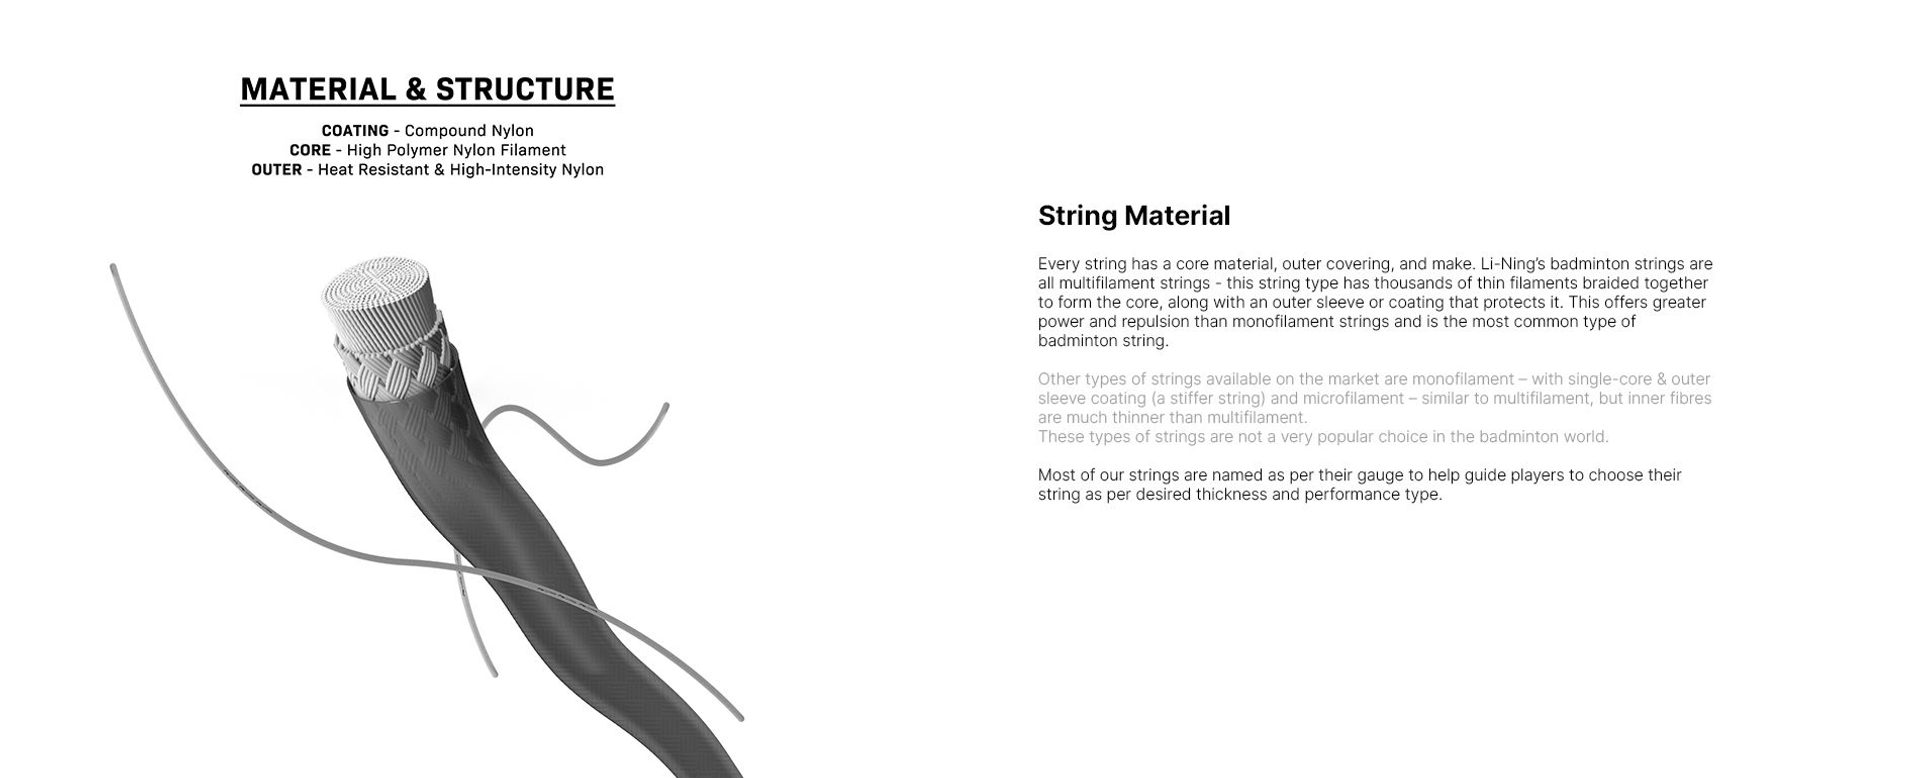 Li-Ning's Multifilament Badminton string structure